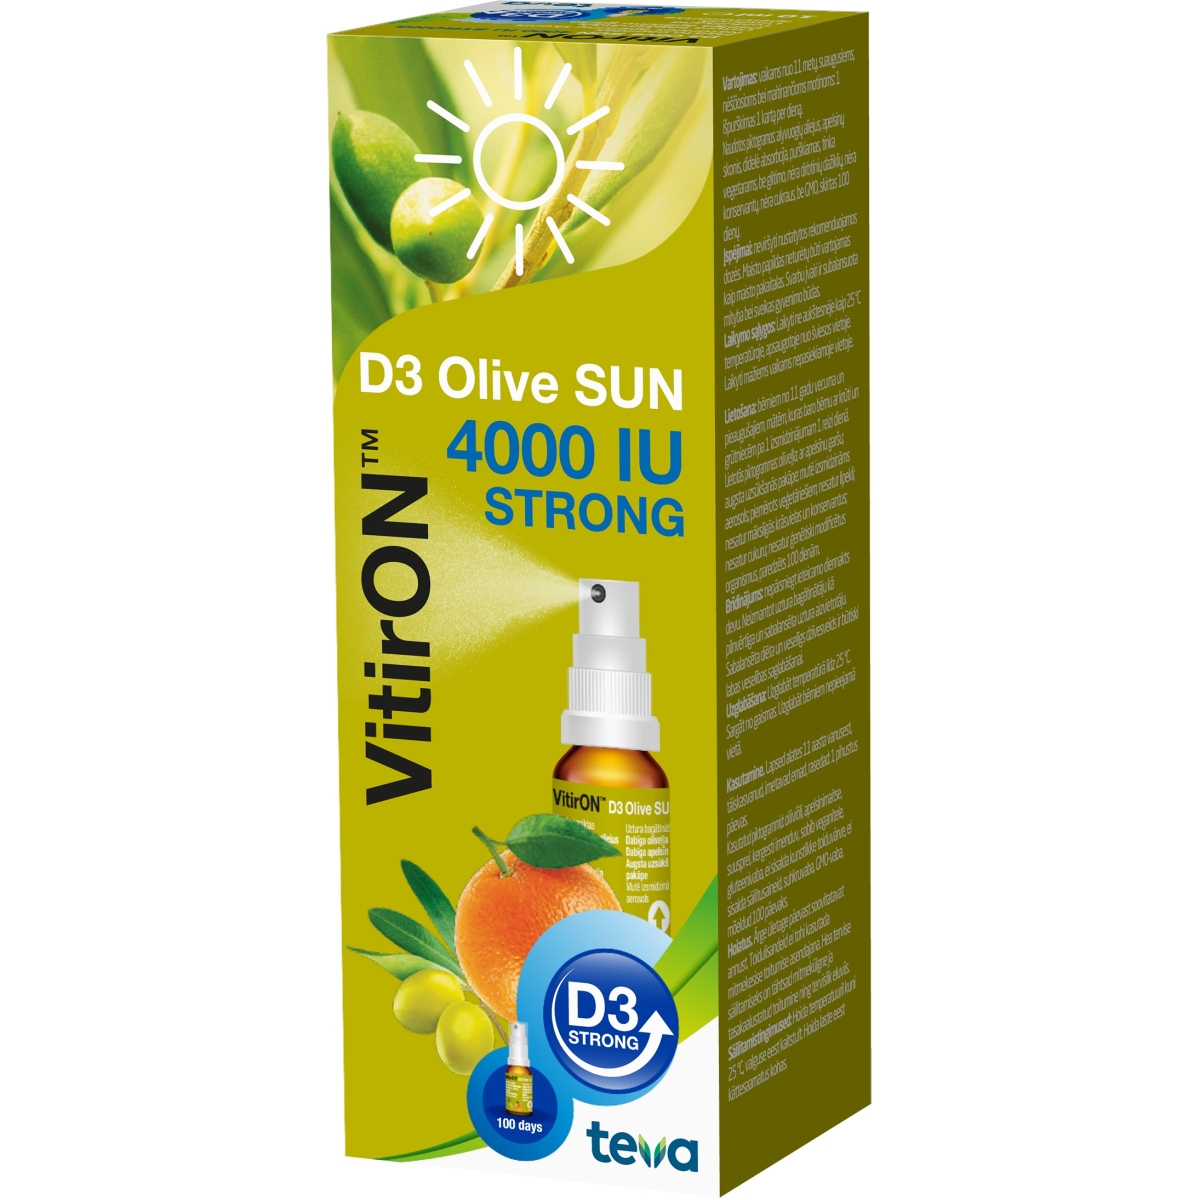 VitirON™ D3 Olive SUN 4000 IU STRONG